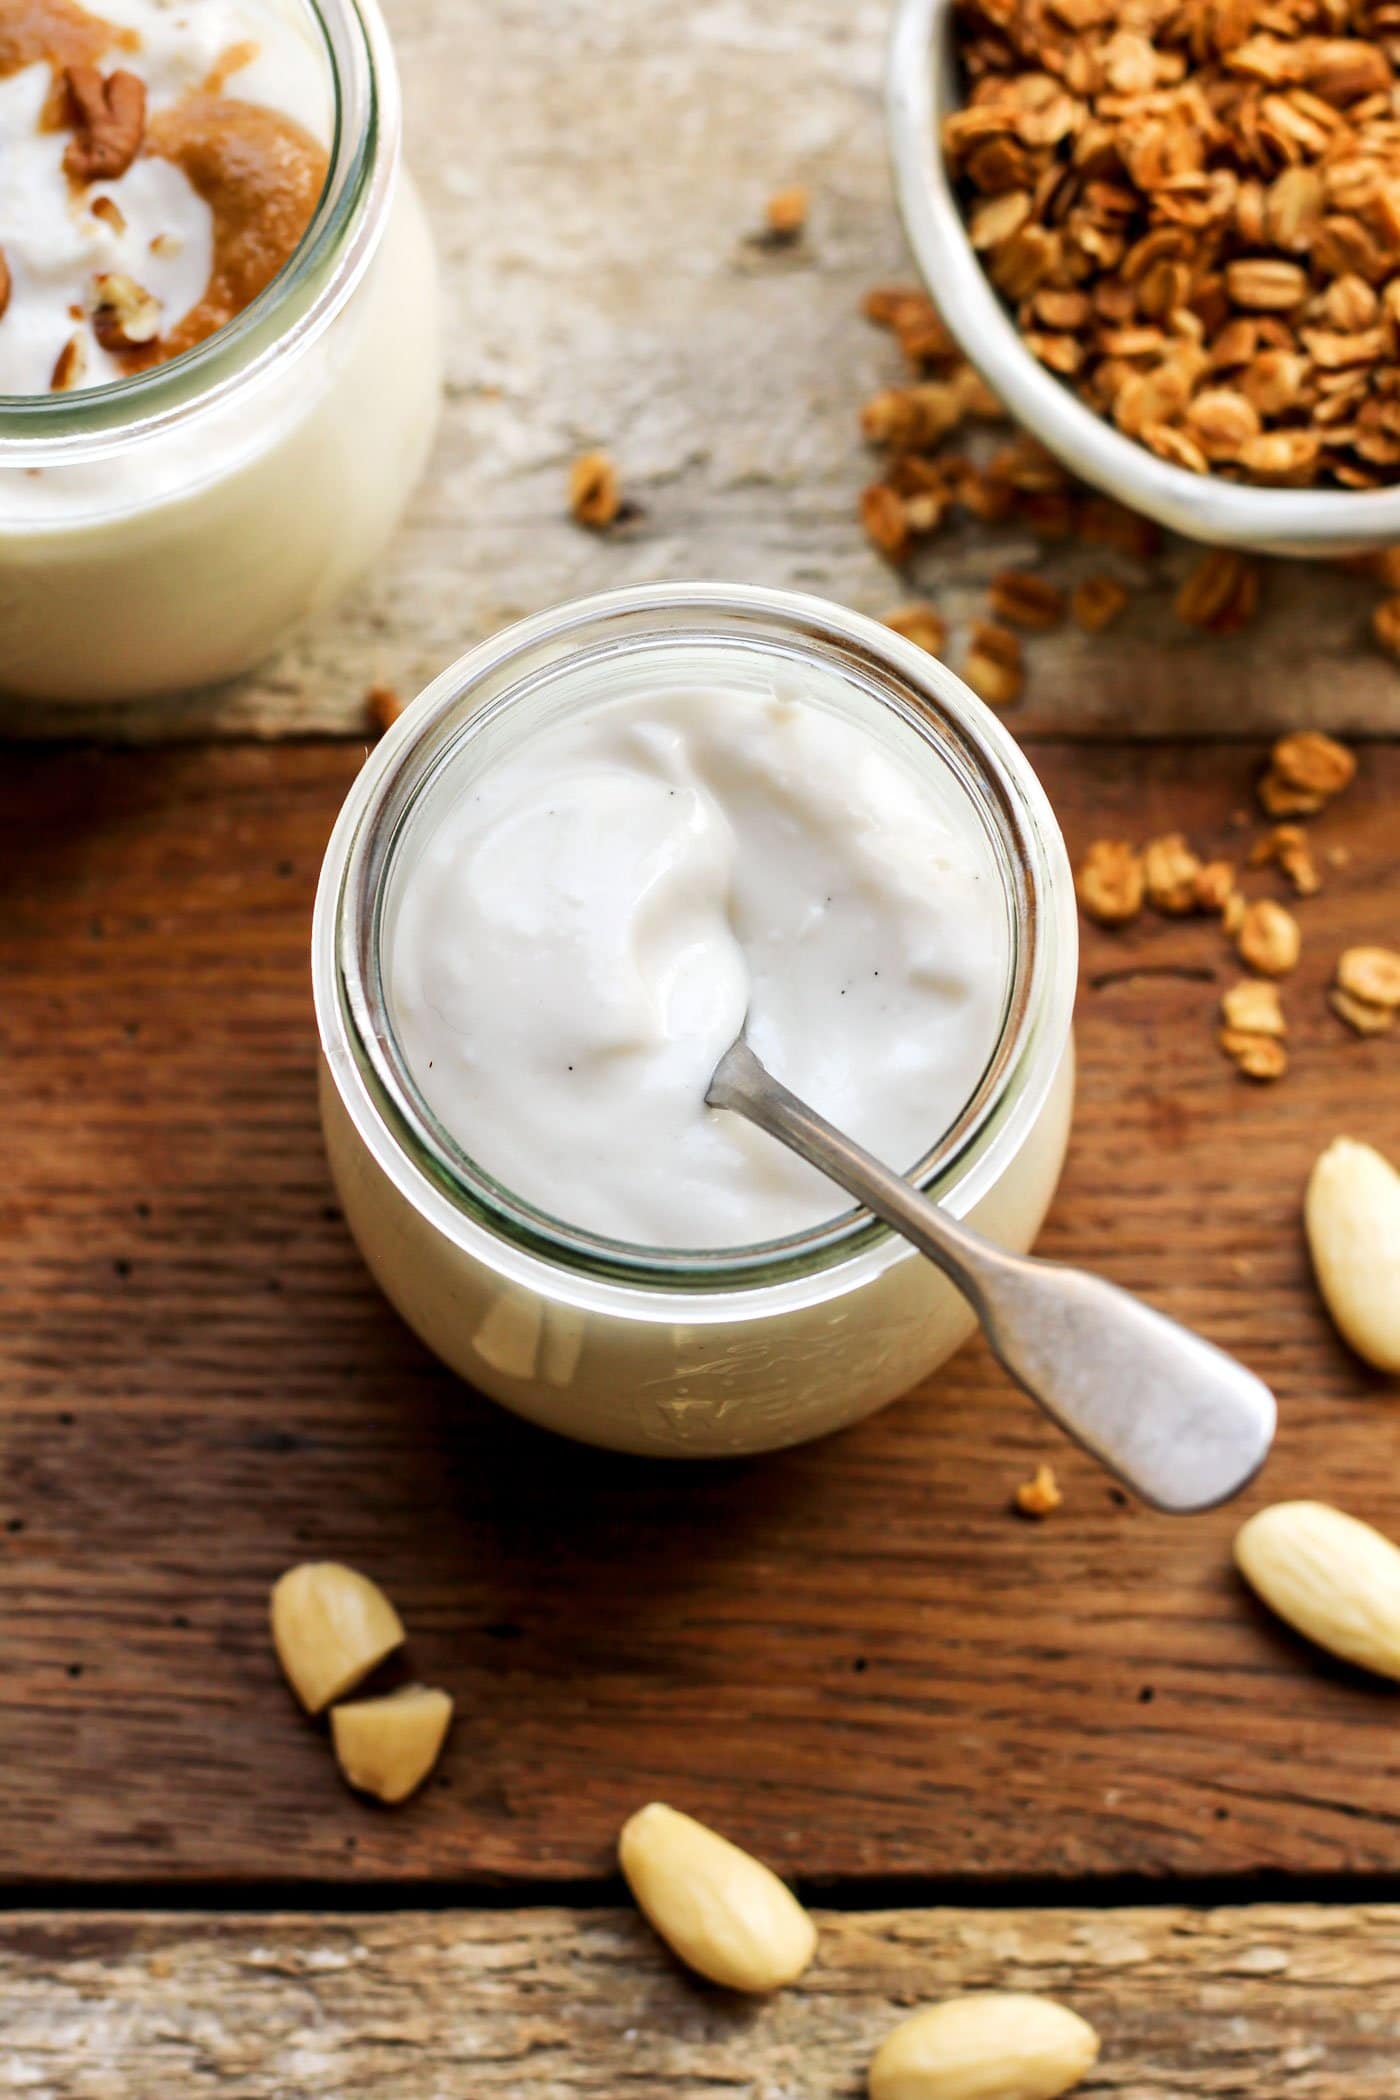 The Best Vegan Almond Milk Yogurt